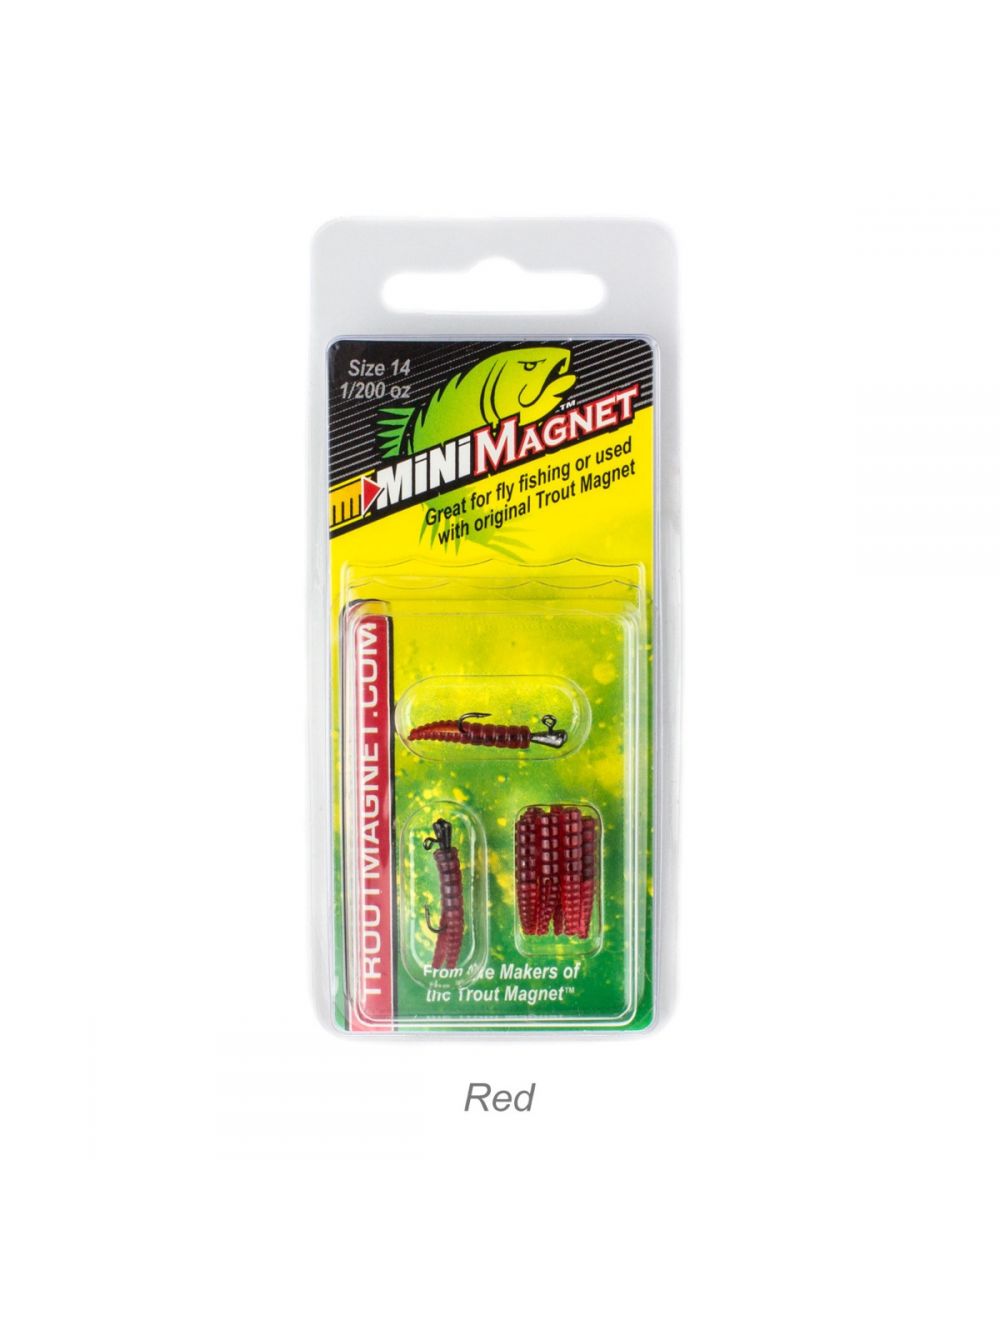 Leland Lures Mini Magnet 10pc Packs - Red